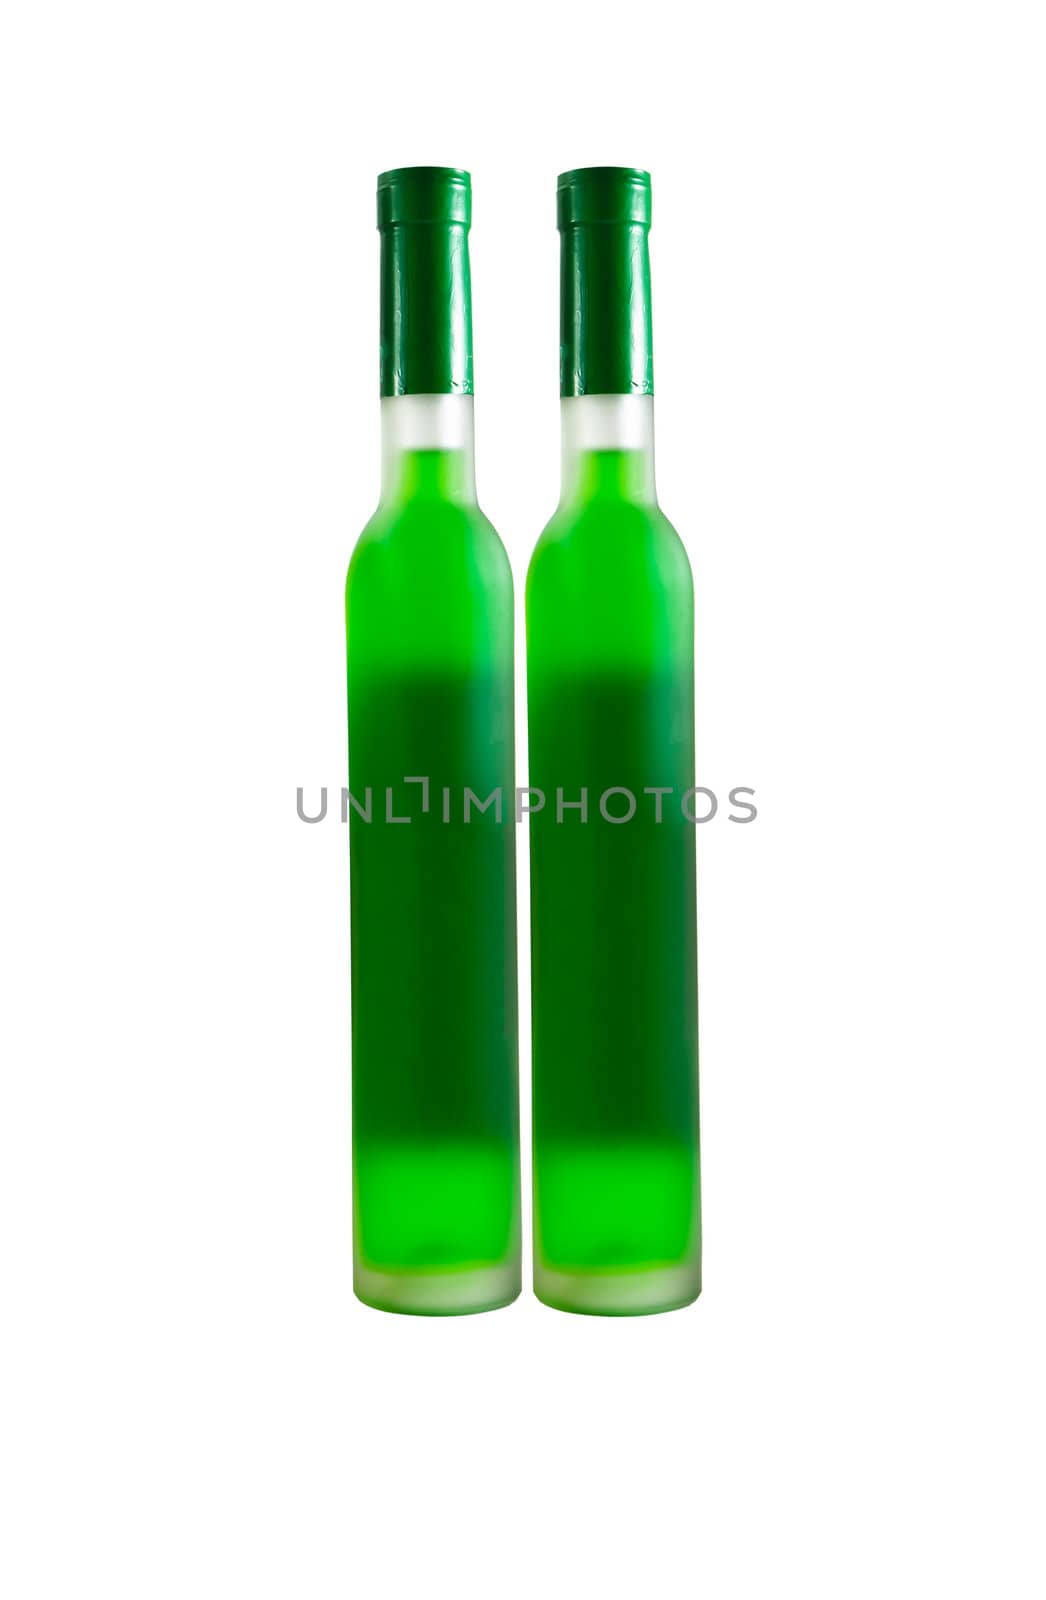 Green wine bottles  by stoonn